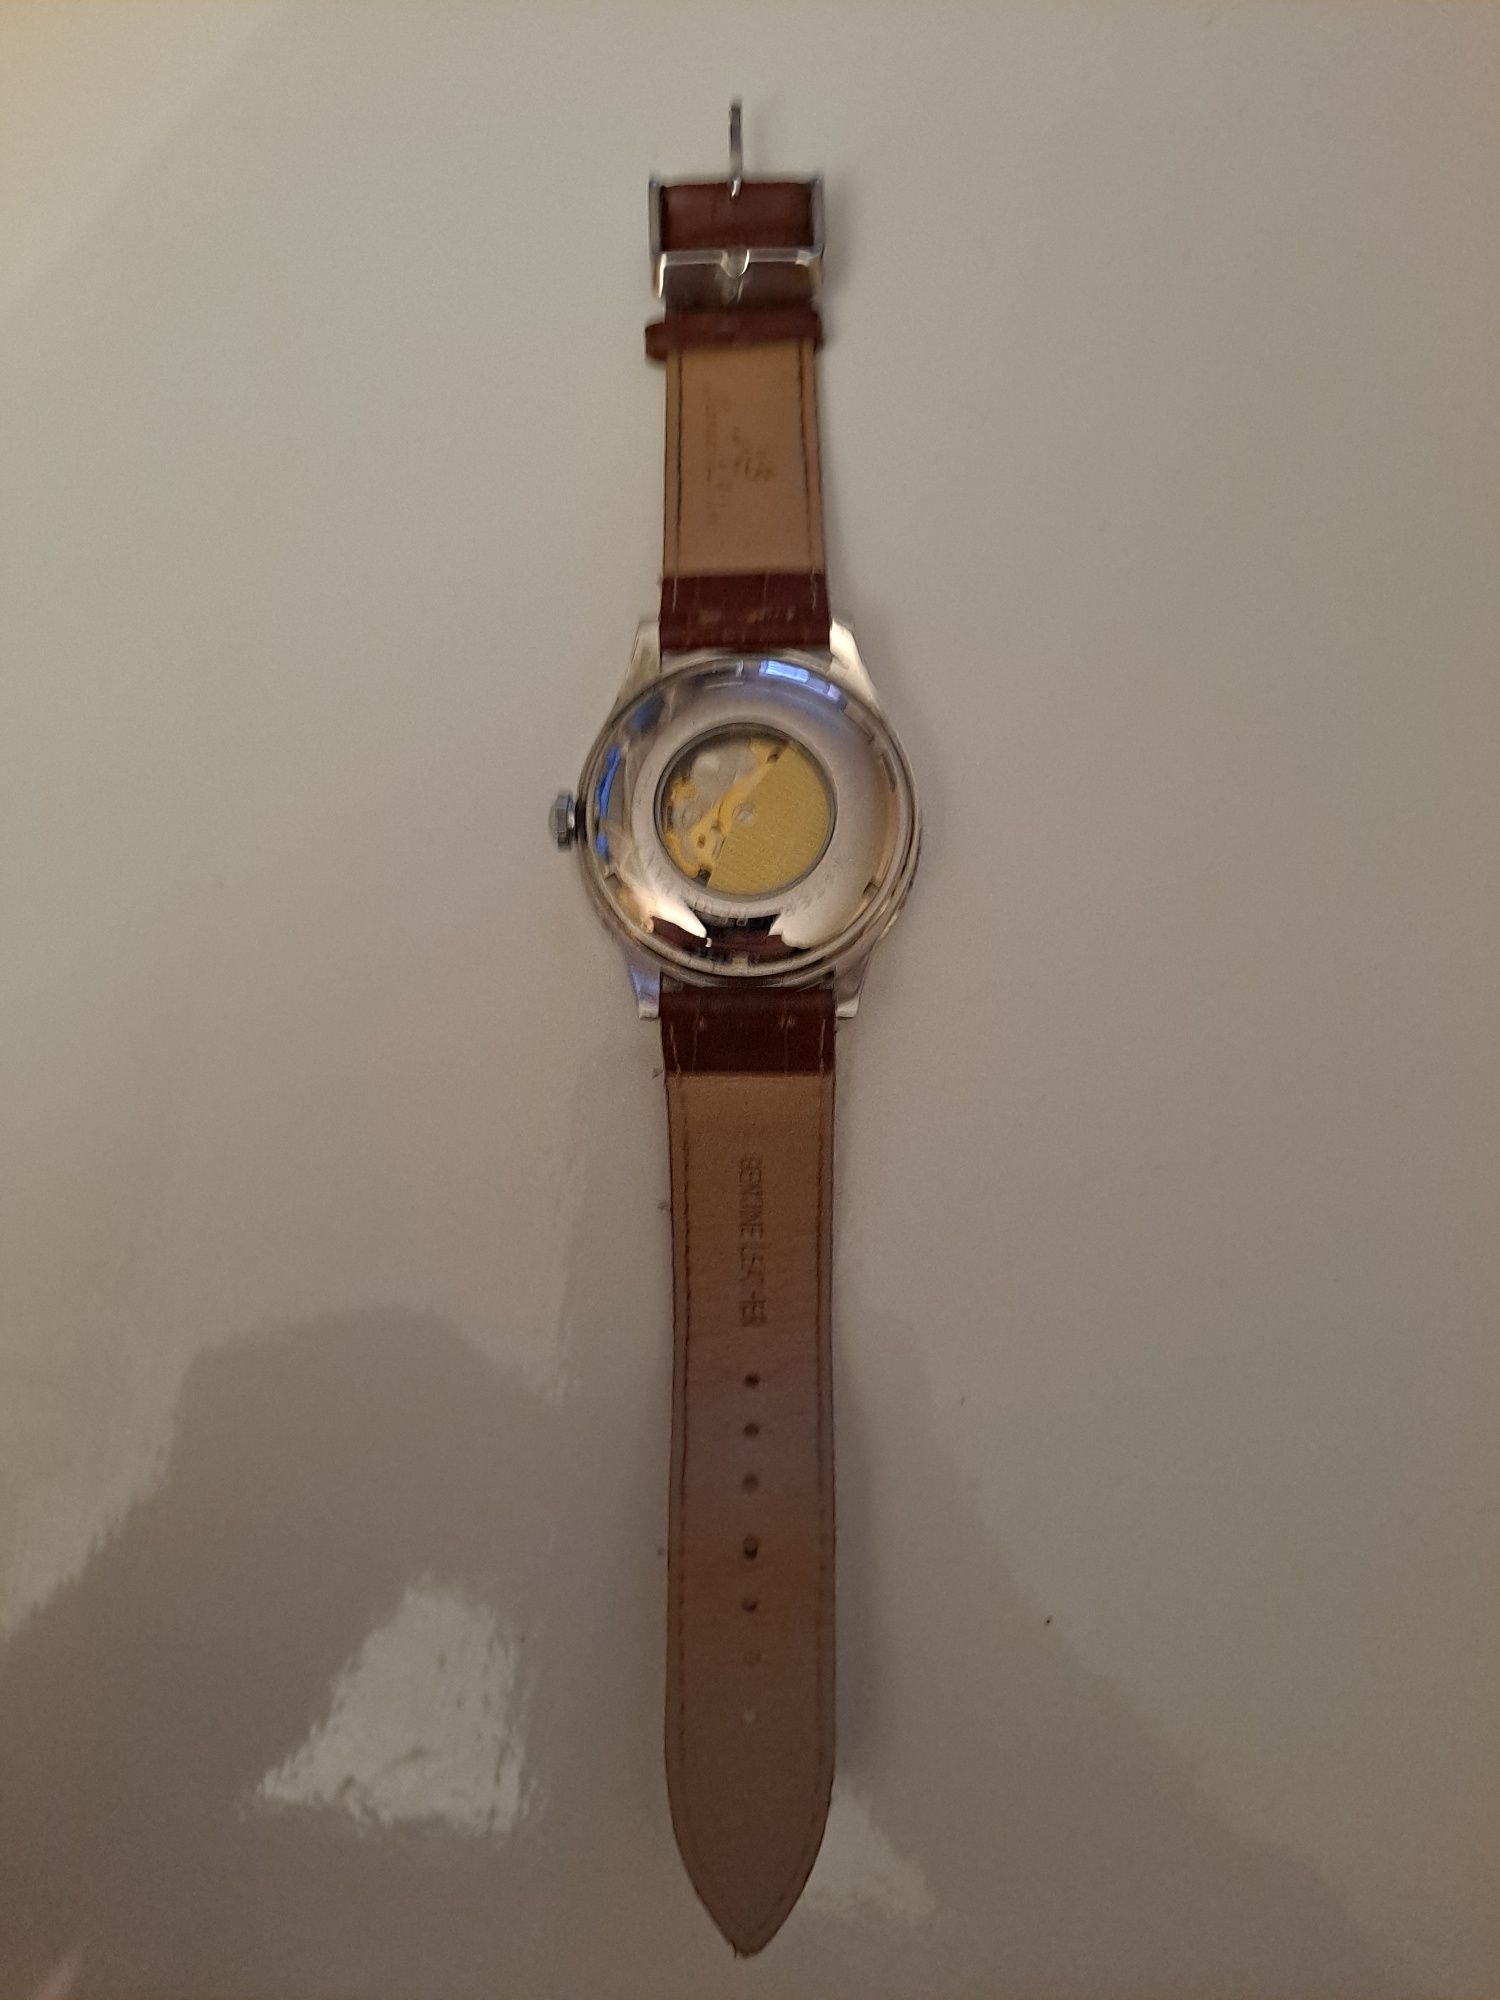 Zegarek automat firmy Kzonen Söhne